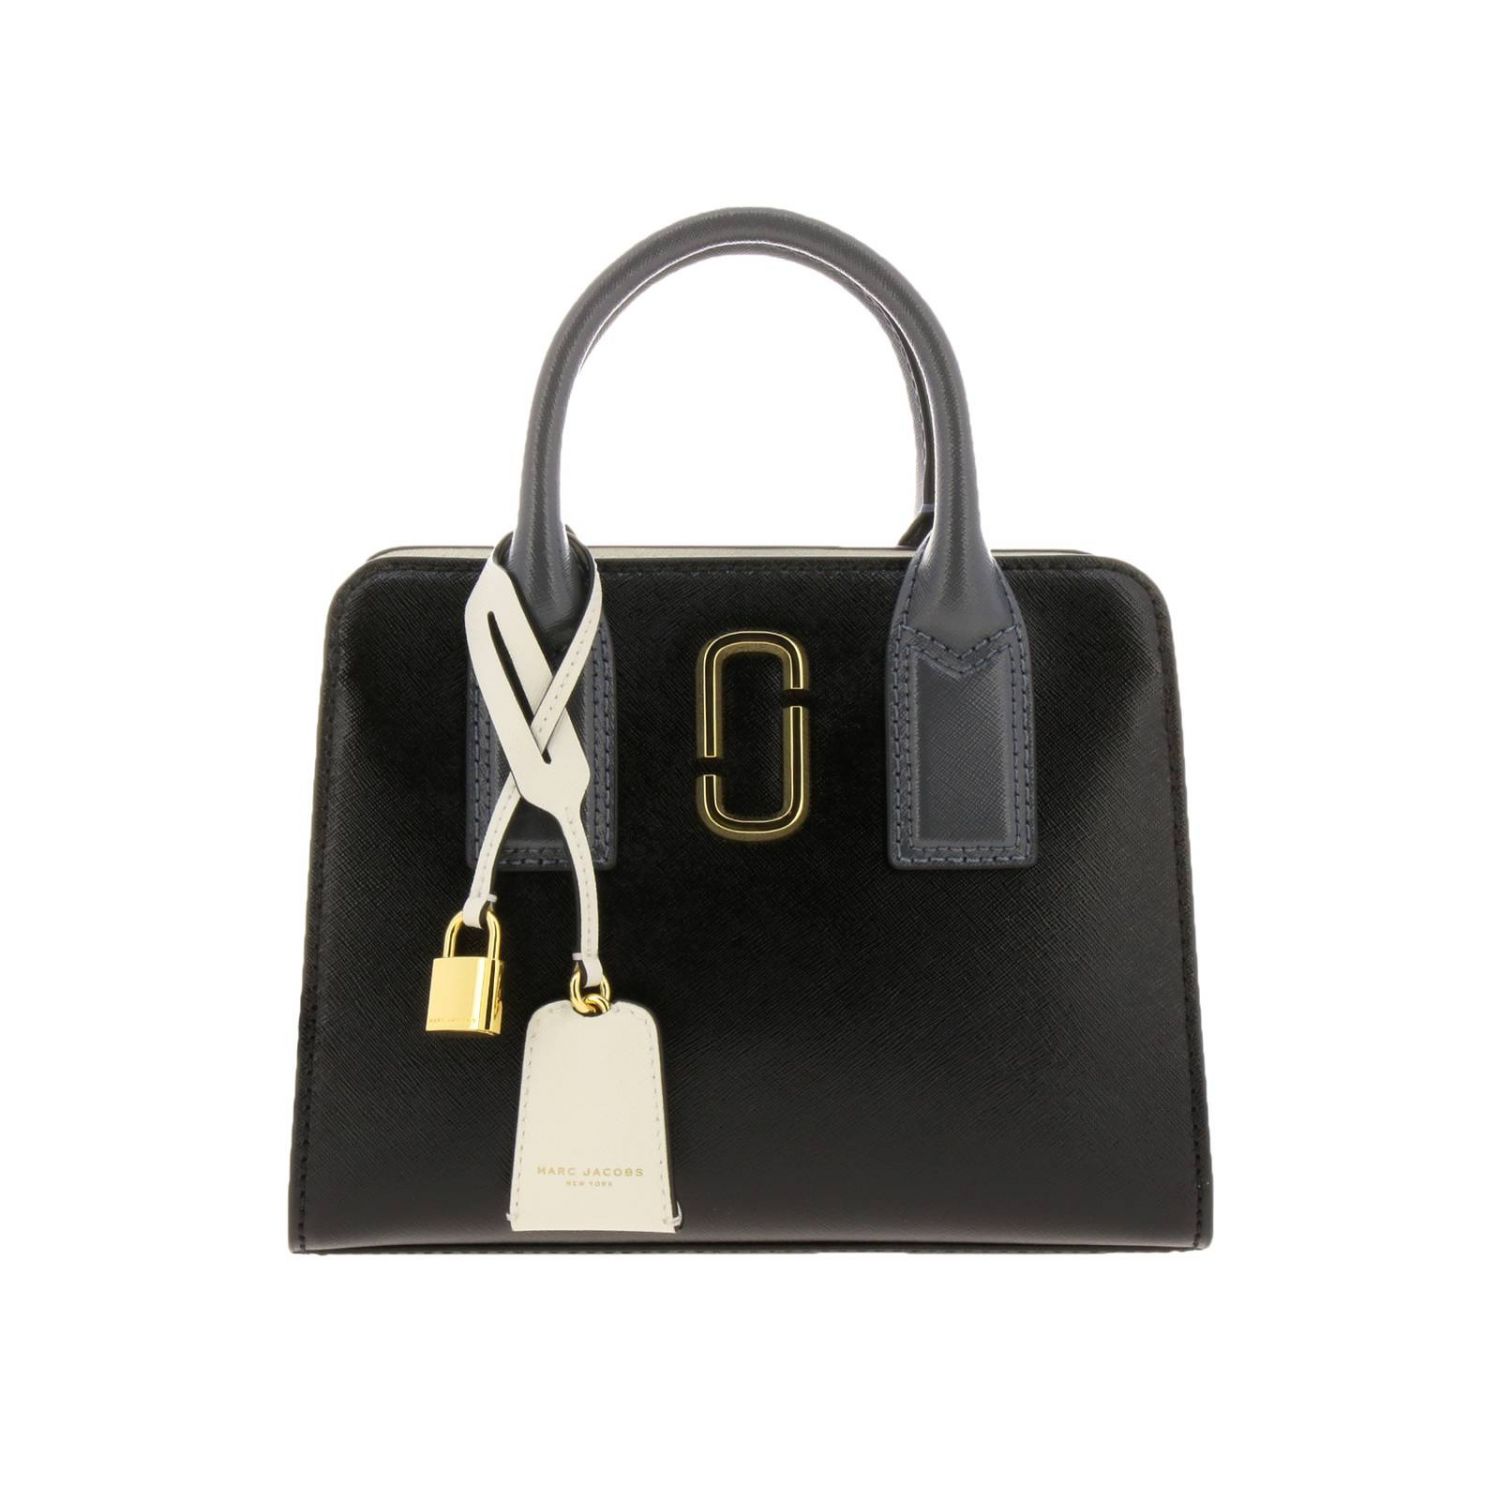 Marc Jacobs Outlet: Shoulder bag women | Handbag Marc Jacobs Women ...